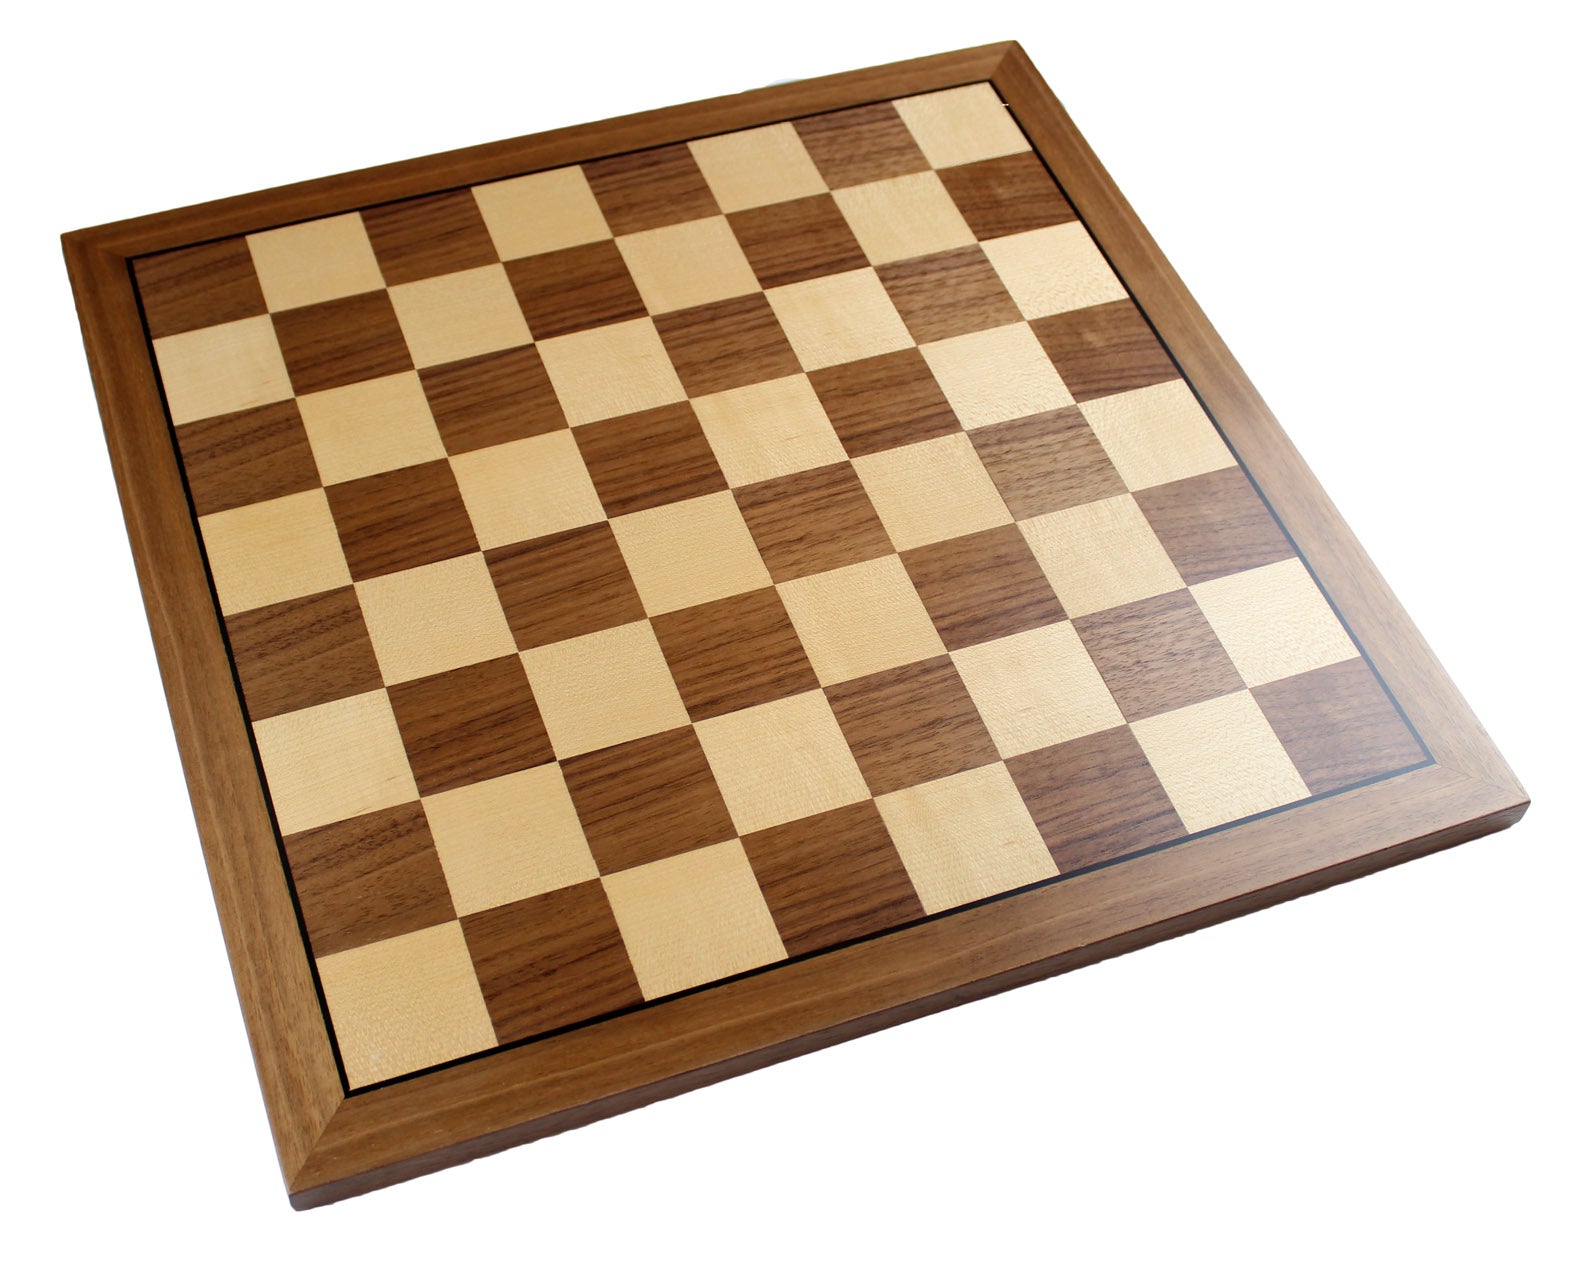 Walnut & Maple Chess Board